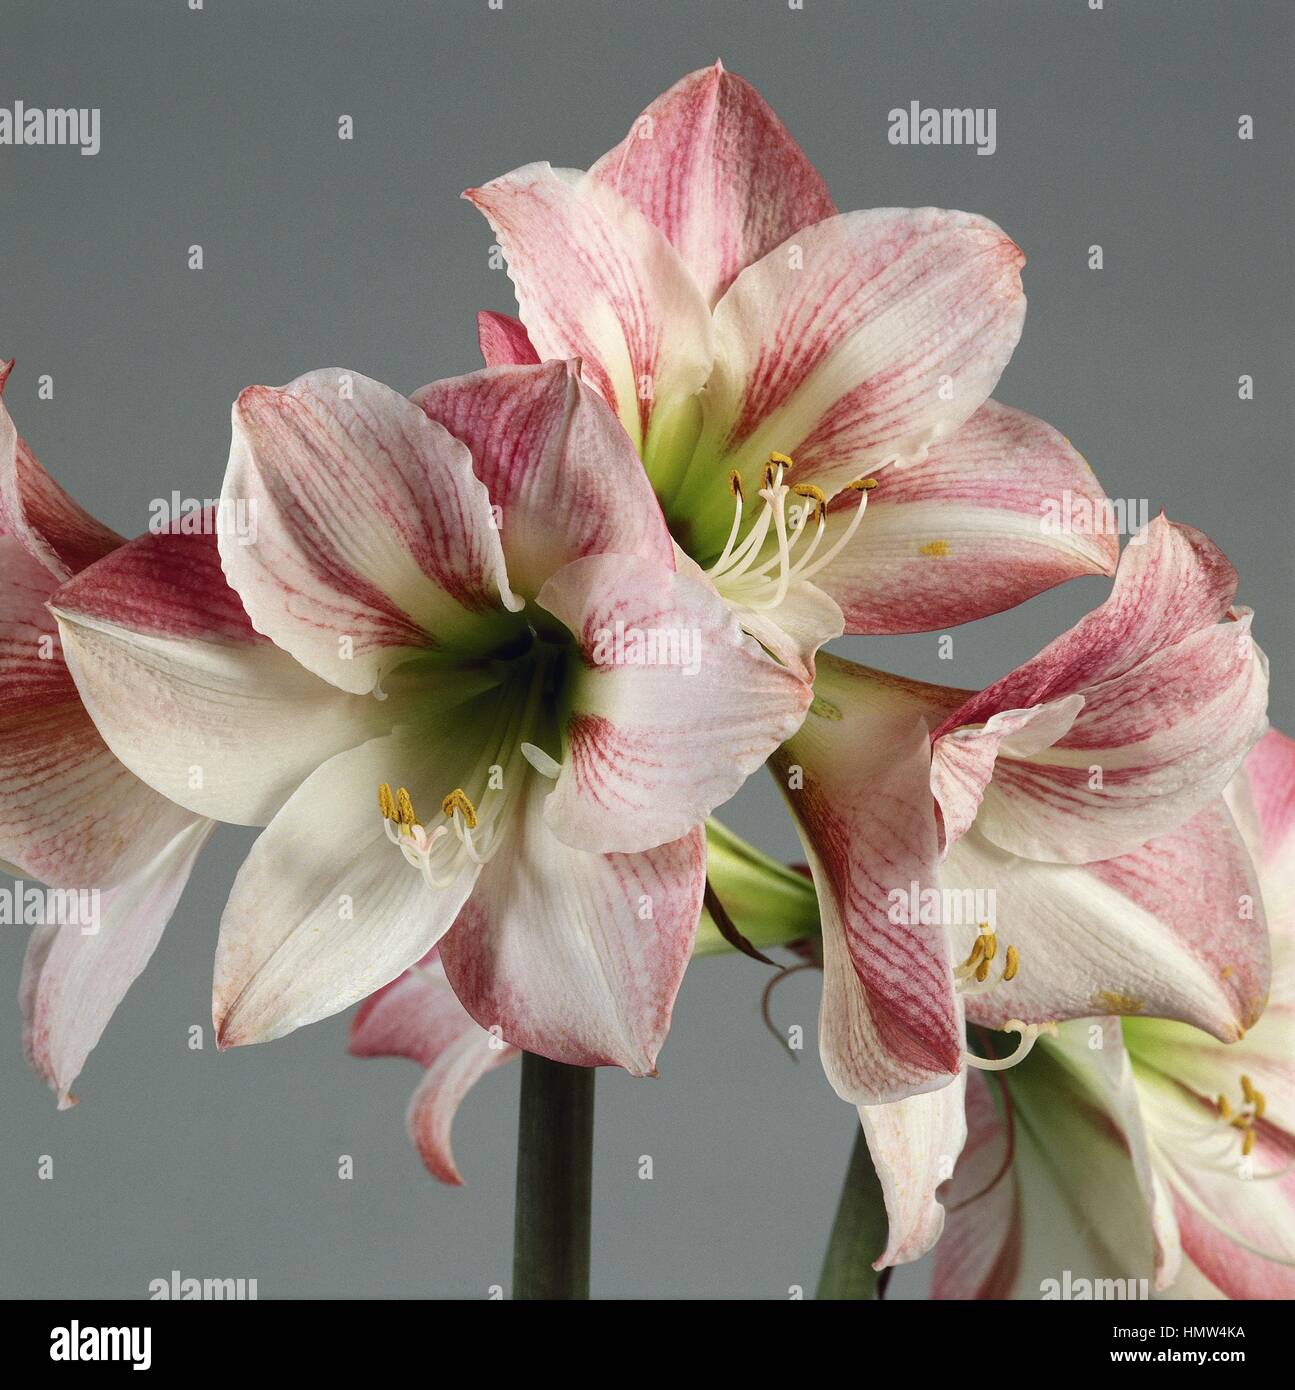 Botanik - Amaryllisgewächse - Hippeastrum "Bouquet" Stockfoto